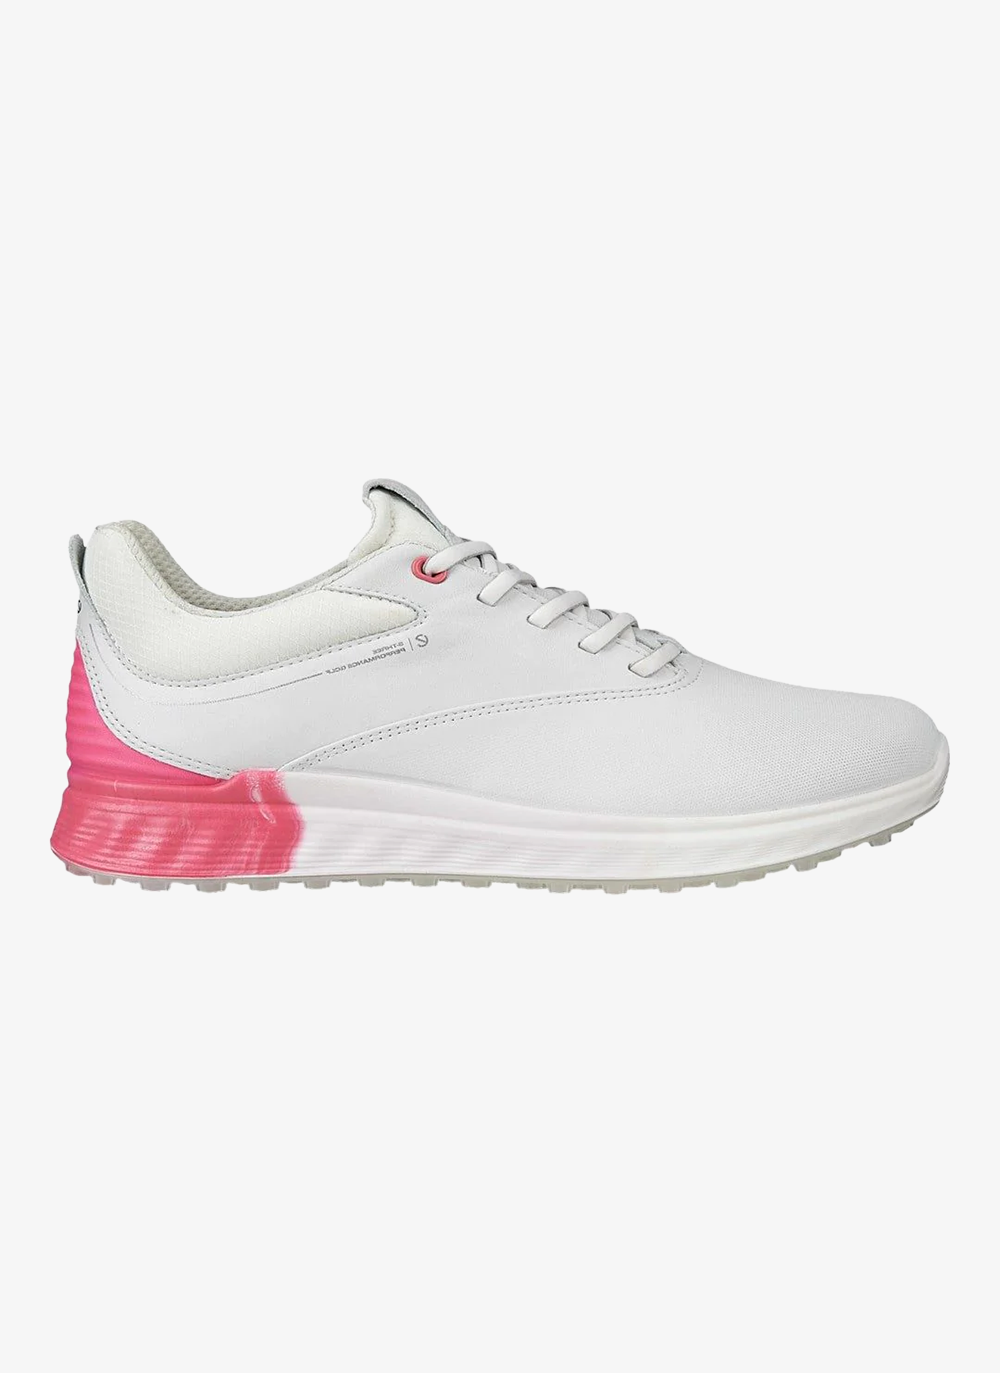 Ecco Ladies S-Three Golf Shoes 102963